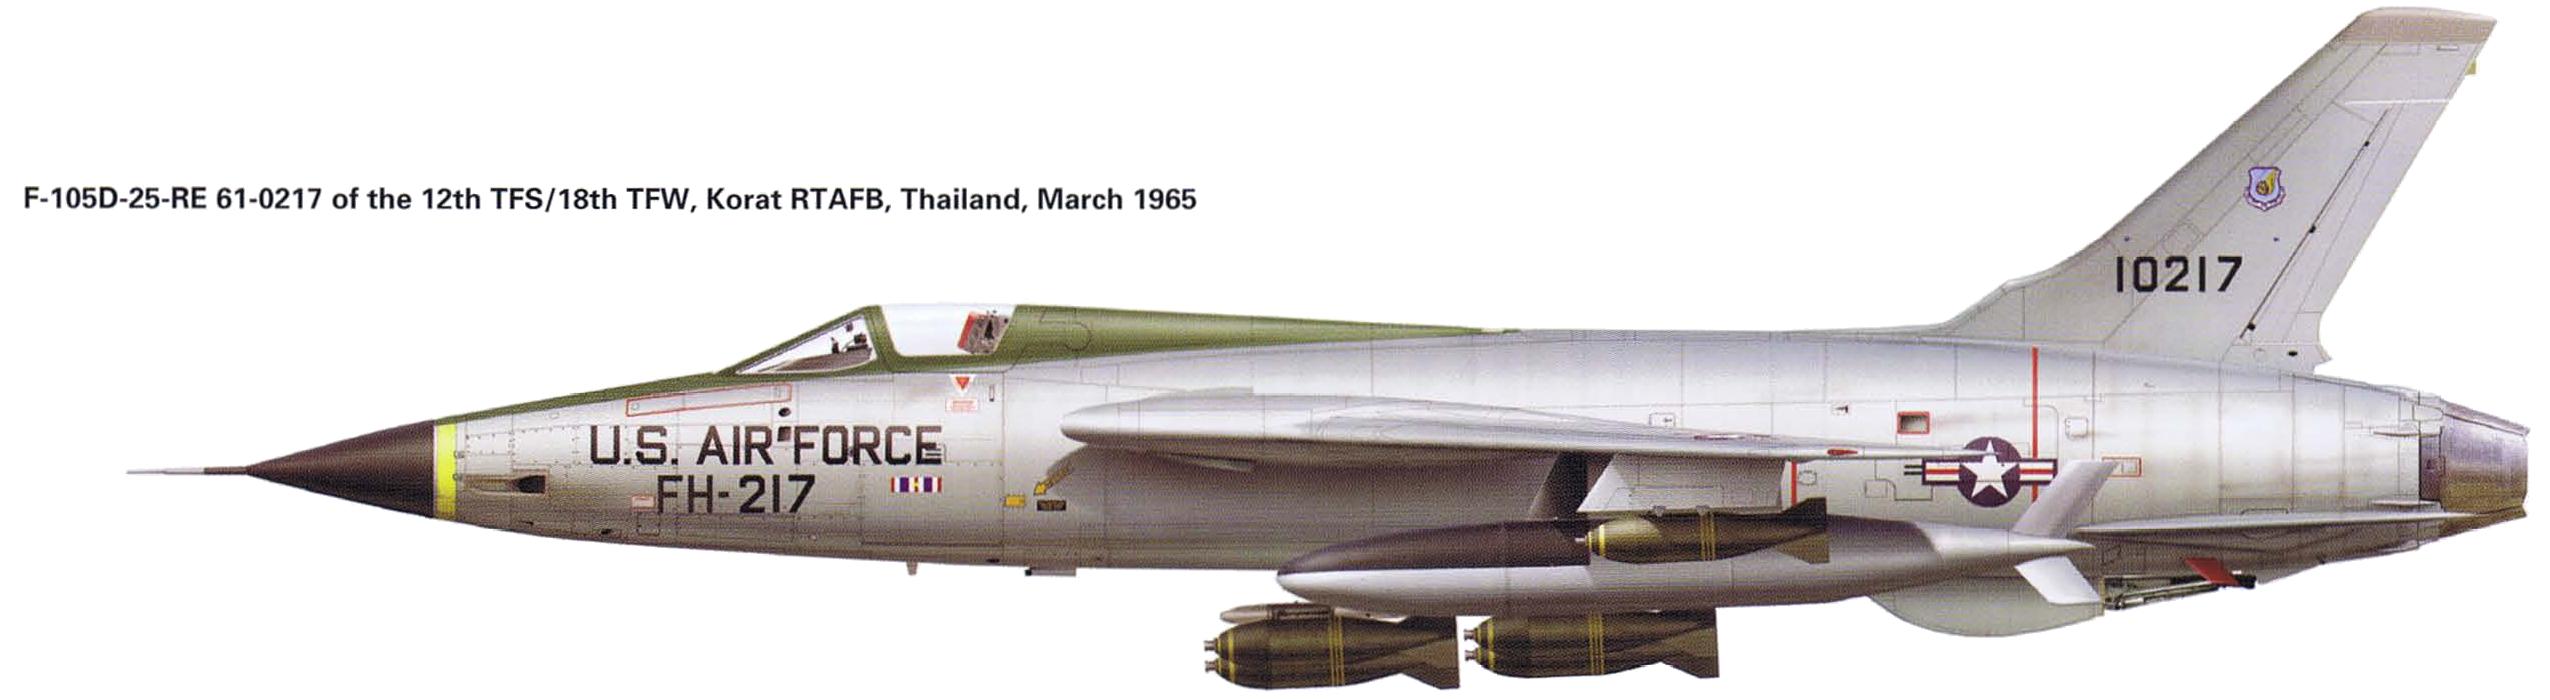 High Resolution Wallpaper | Republic F-105 Thunderchief 2550x700 px